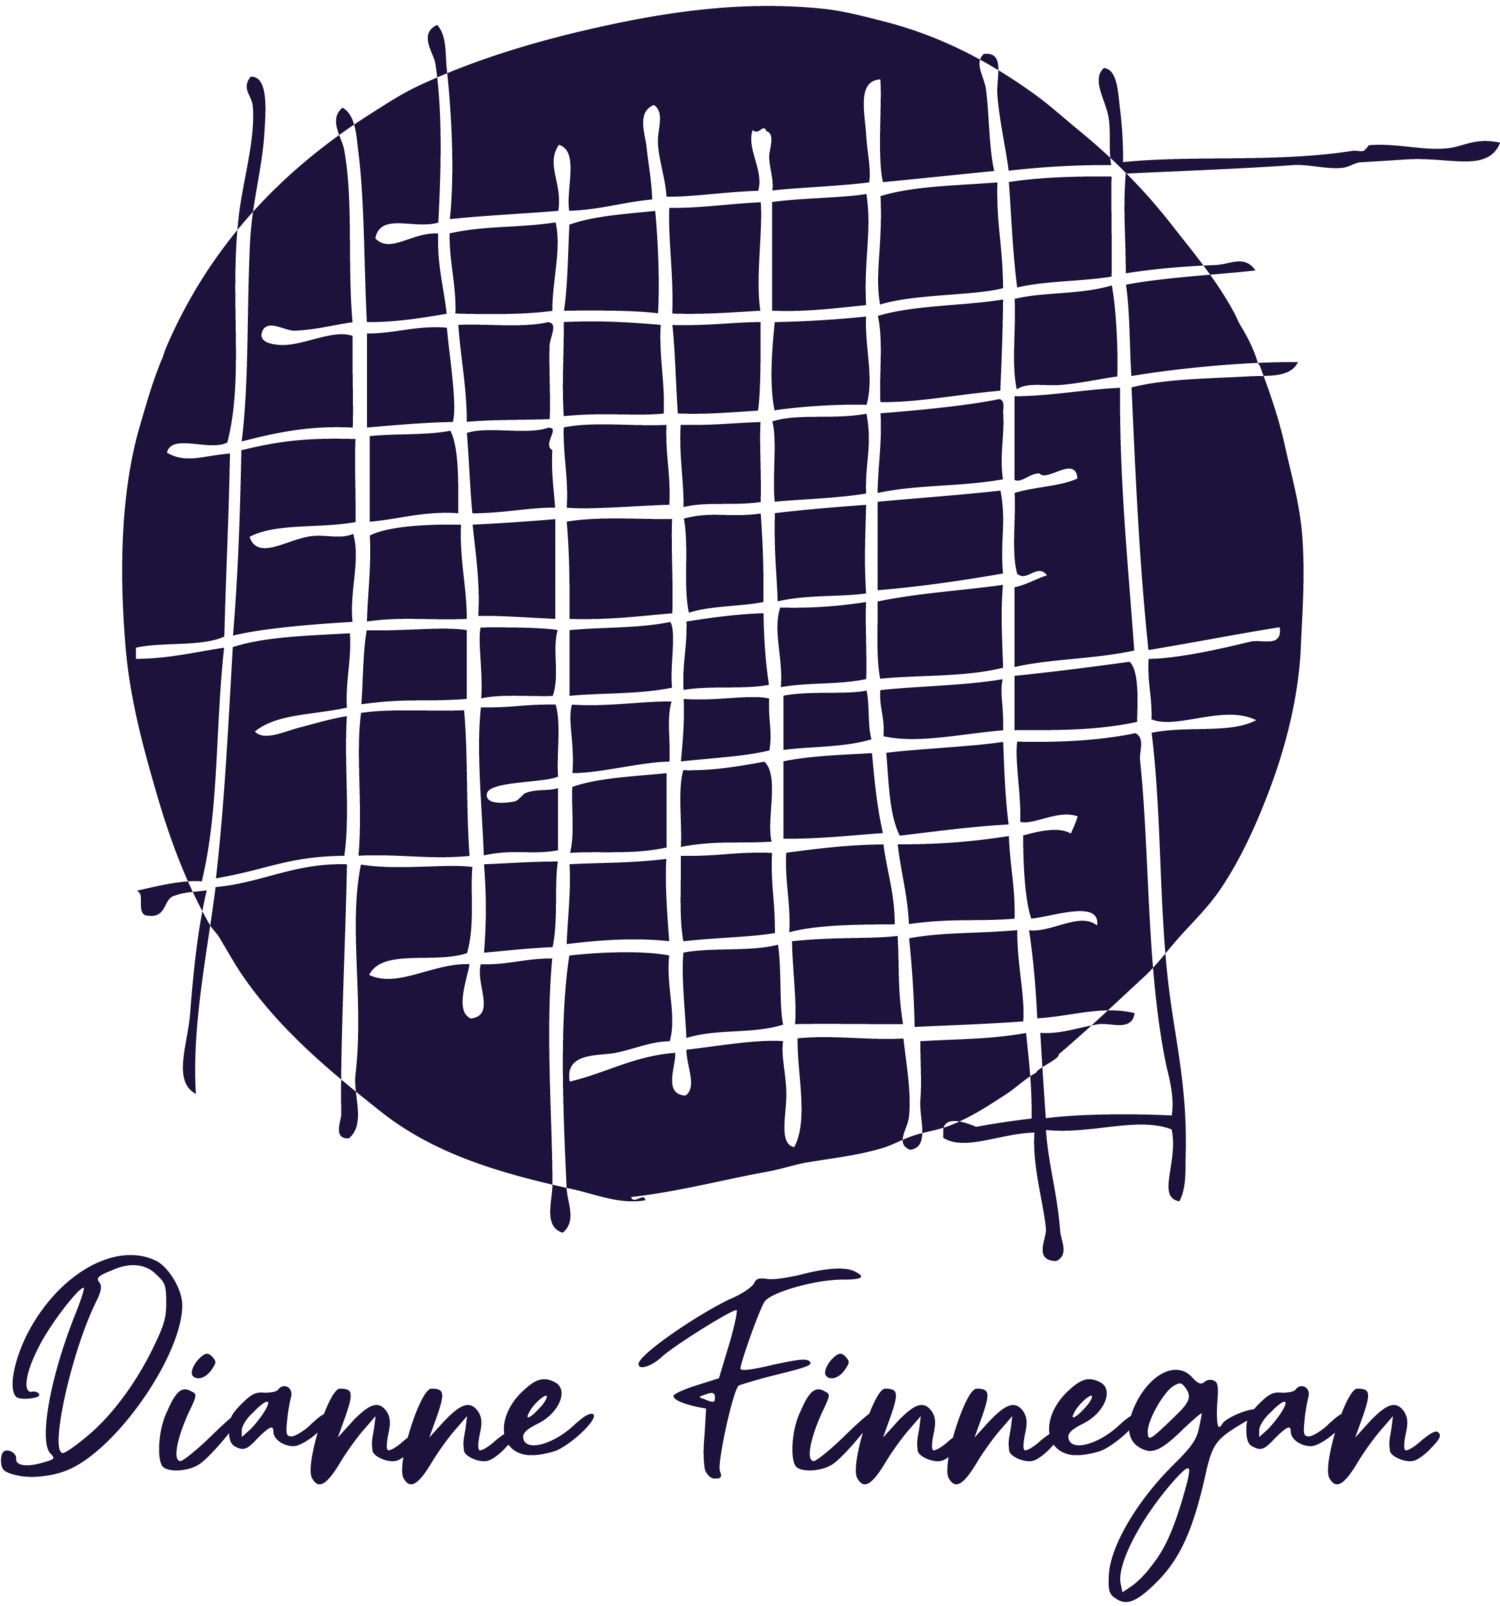 Dianne Finnegan, Australian Textile Artist